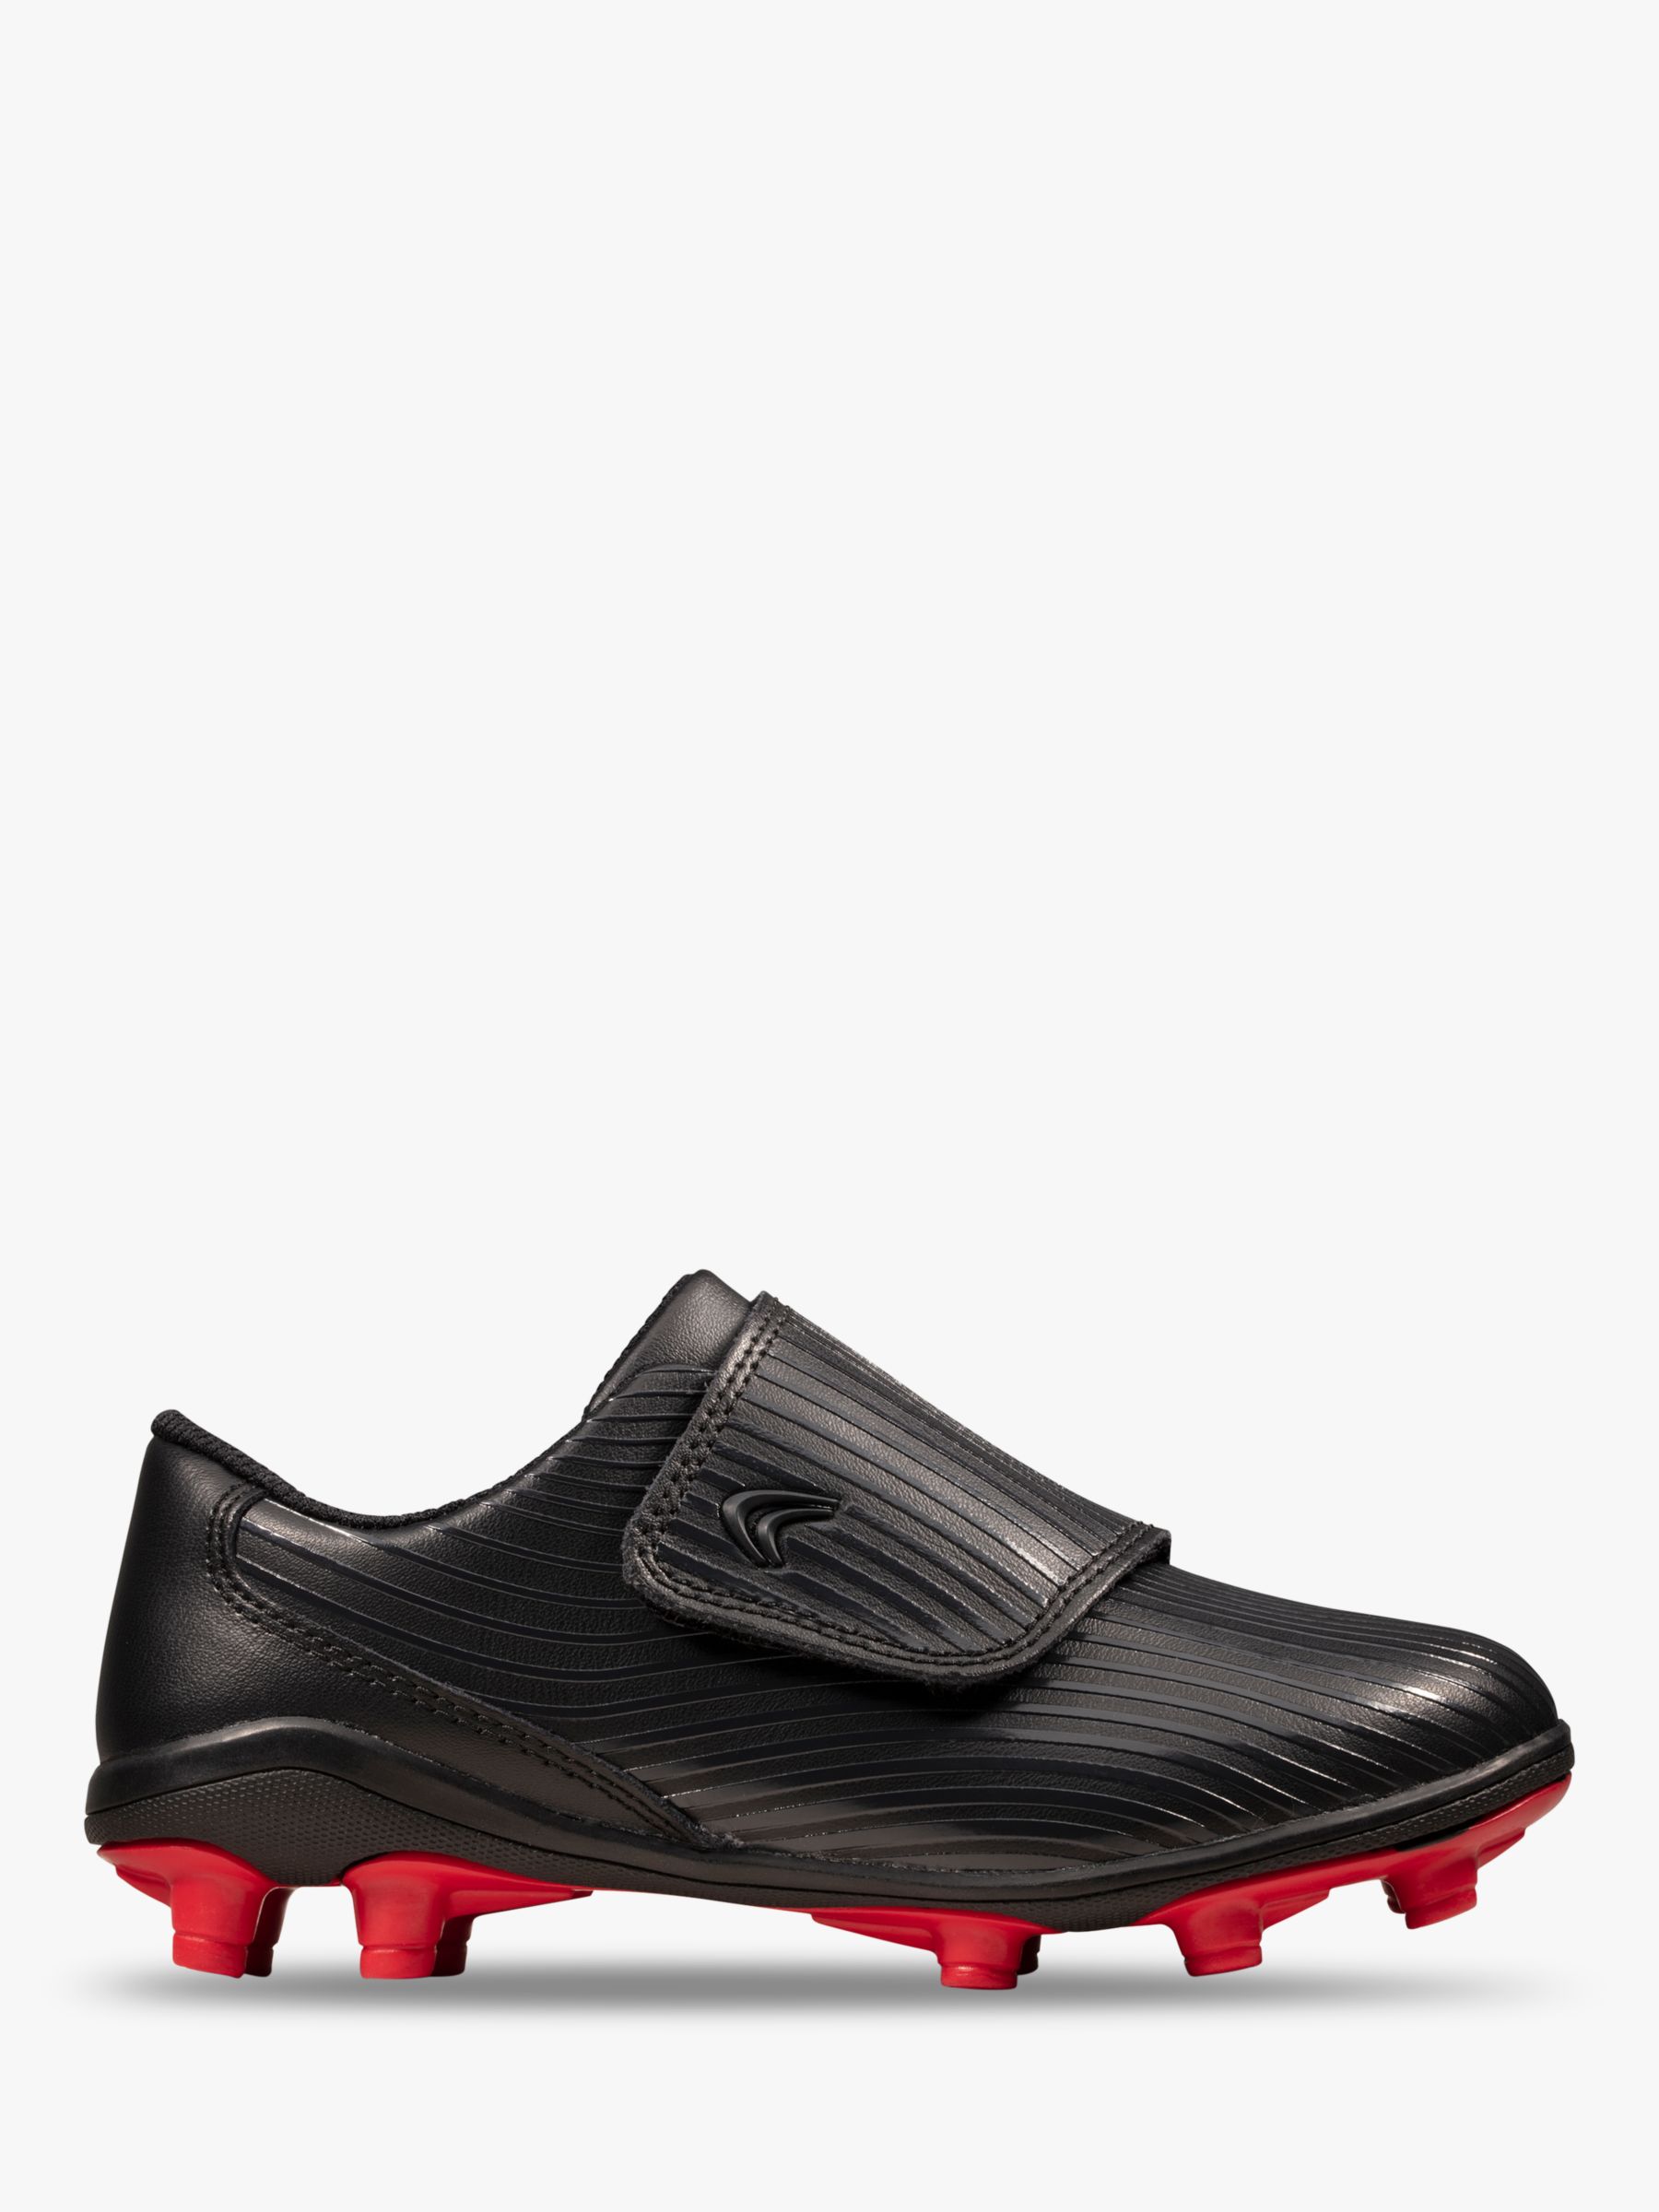 clarks velcro football boots